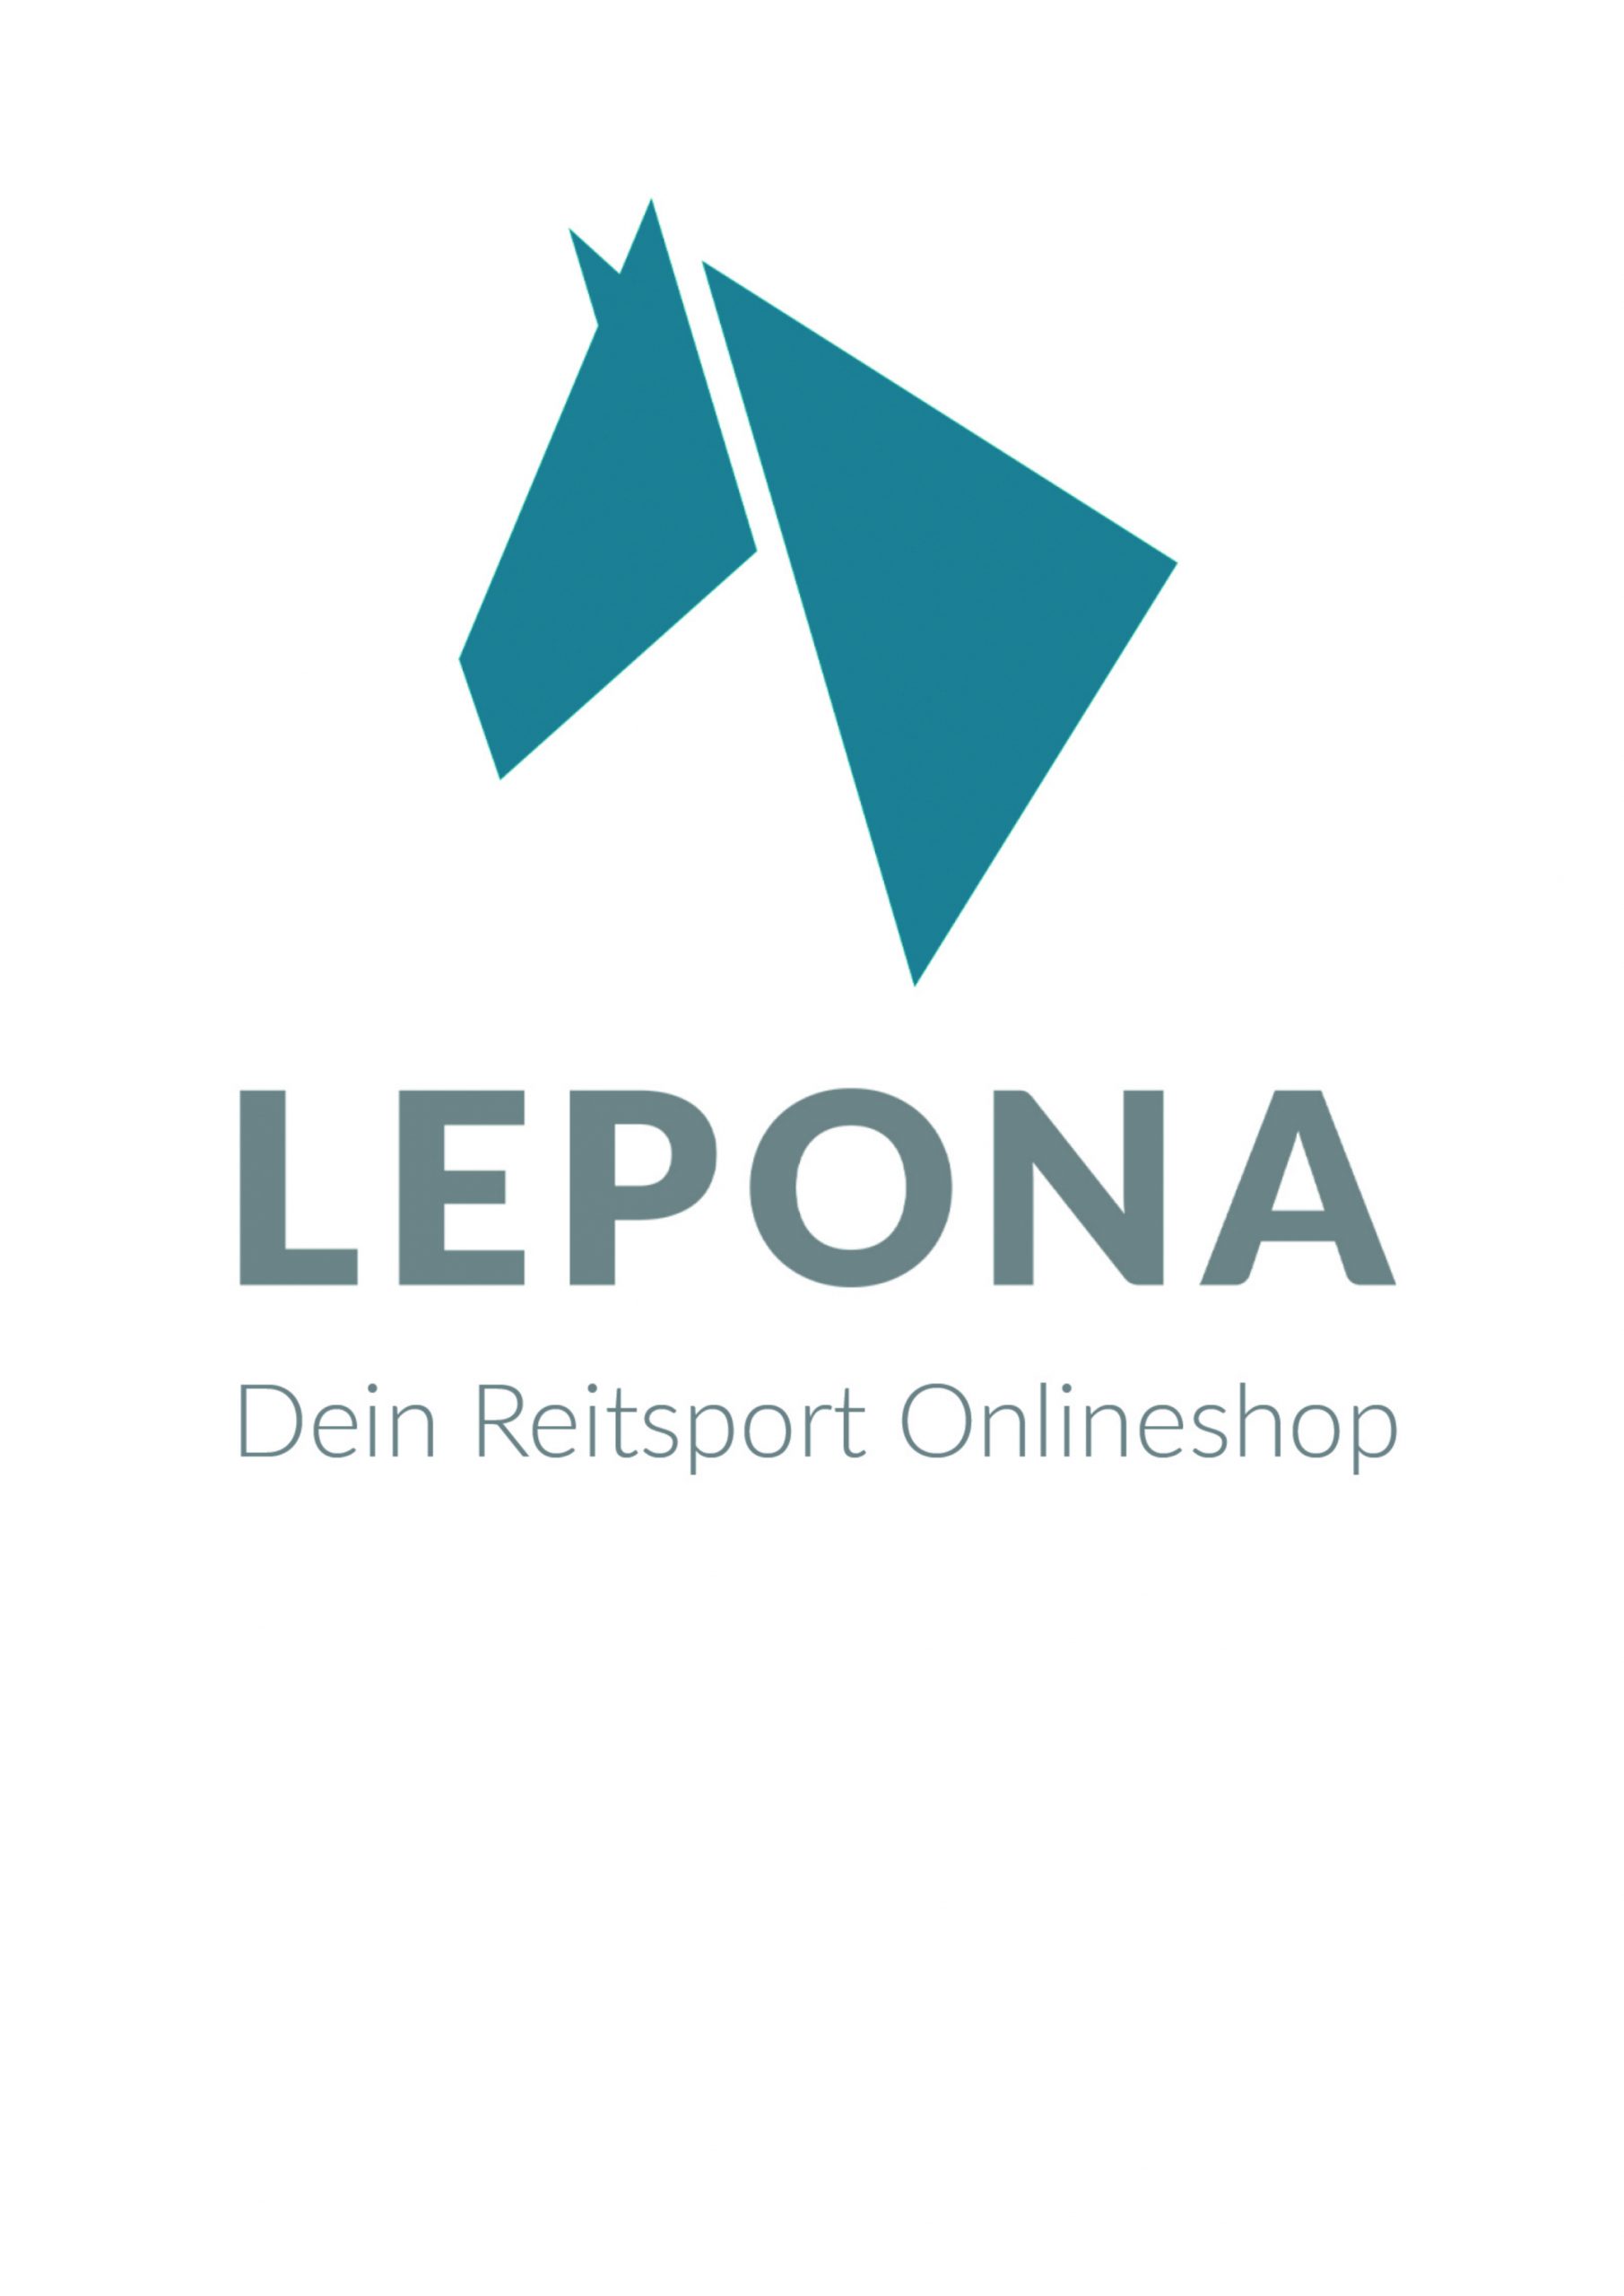 LEPONA Logo